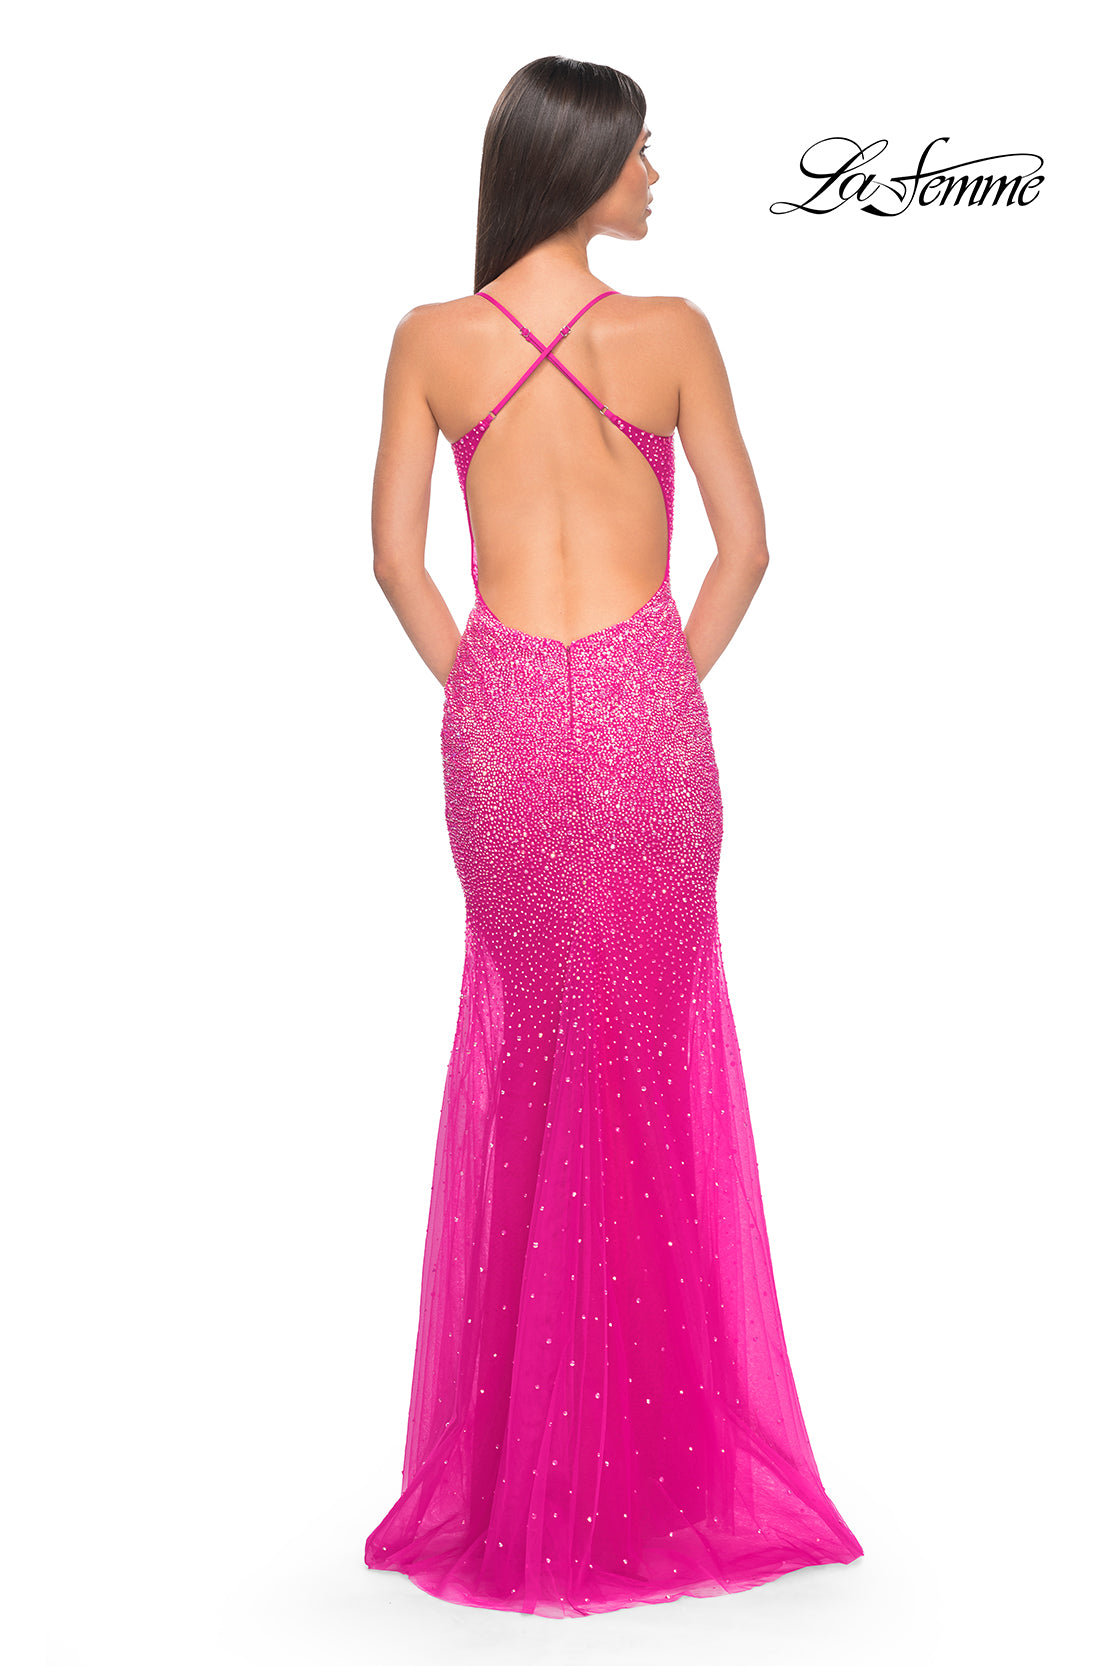 La-Femme-32007-V-Neck-Neckline-Open-Back-Corset-Hot-Stone-Tulle-Fitted-Hot-Fuchsia-Evening-DressB-Chic-Fashions-Prom-Dress